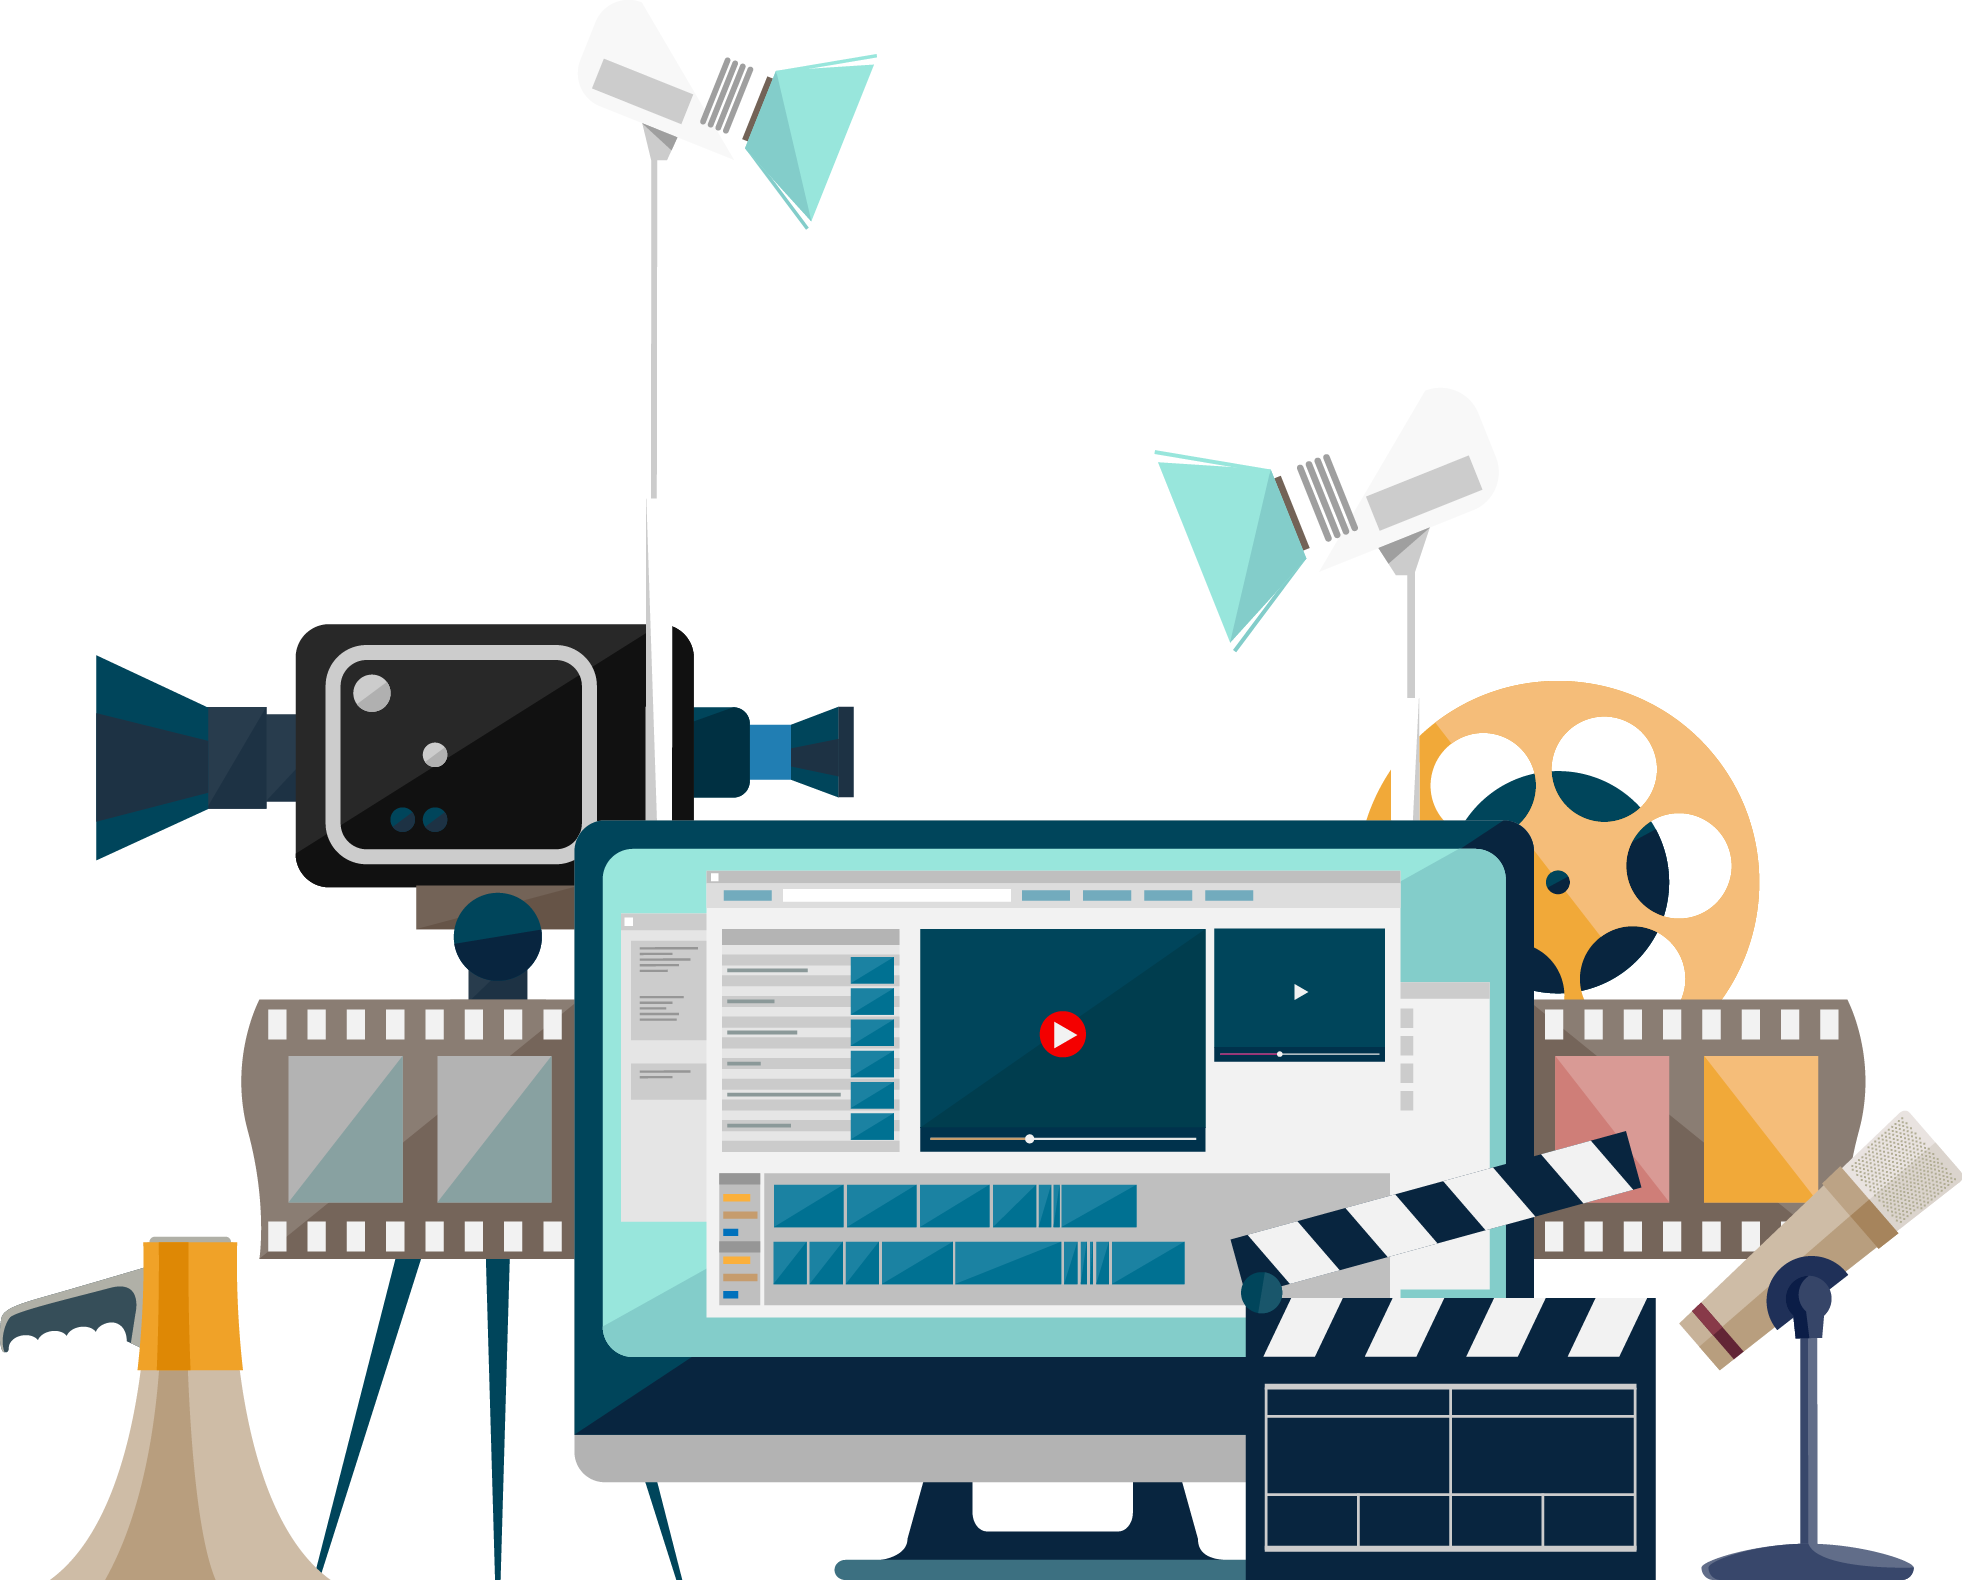 Разработка видео сервисов